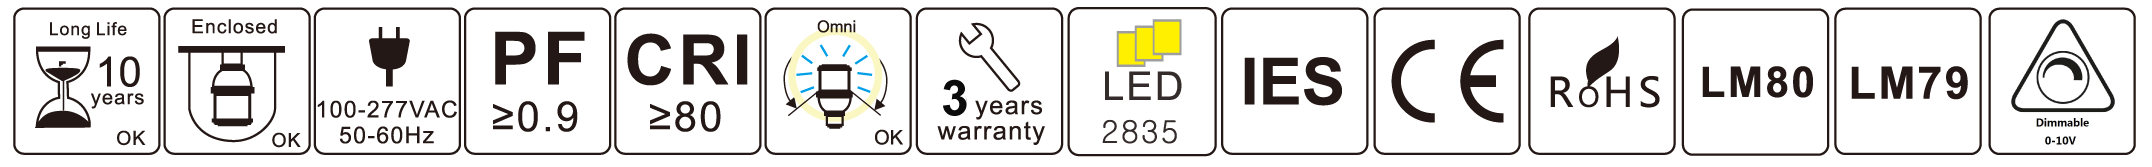 Zertifikate LED Retrofit Leuchtmittel CLF iS & WL